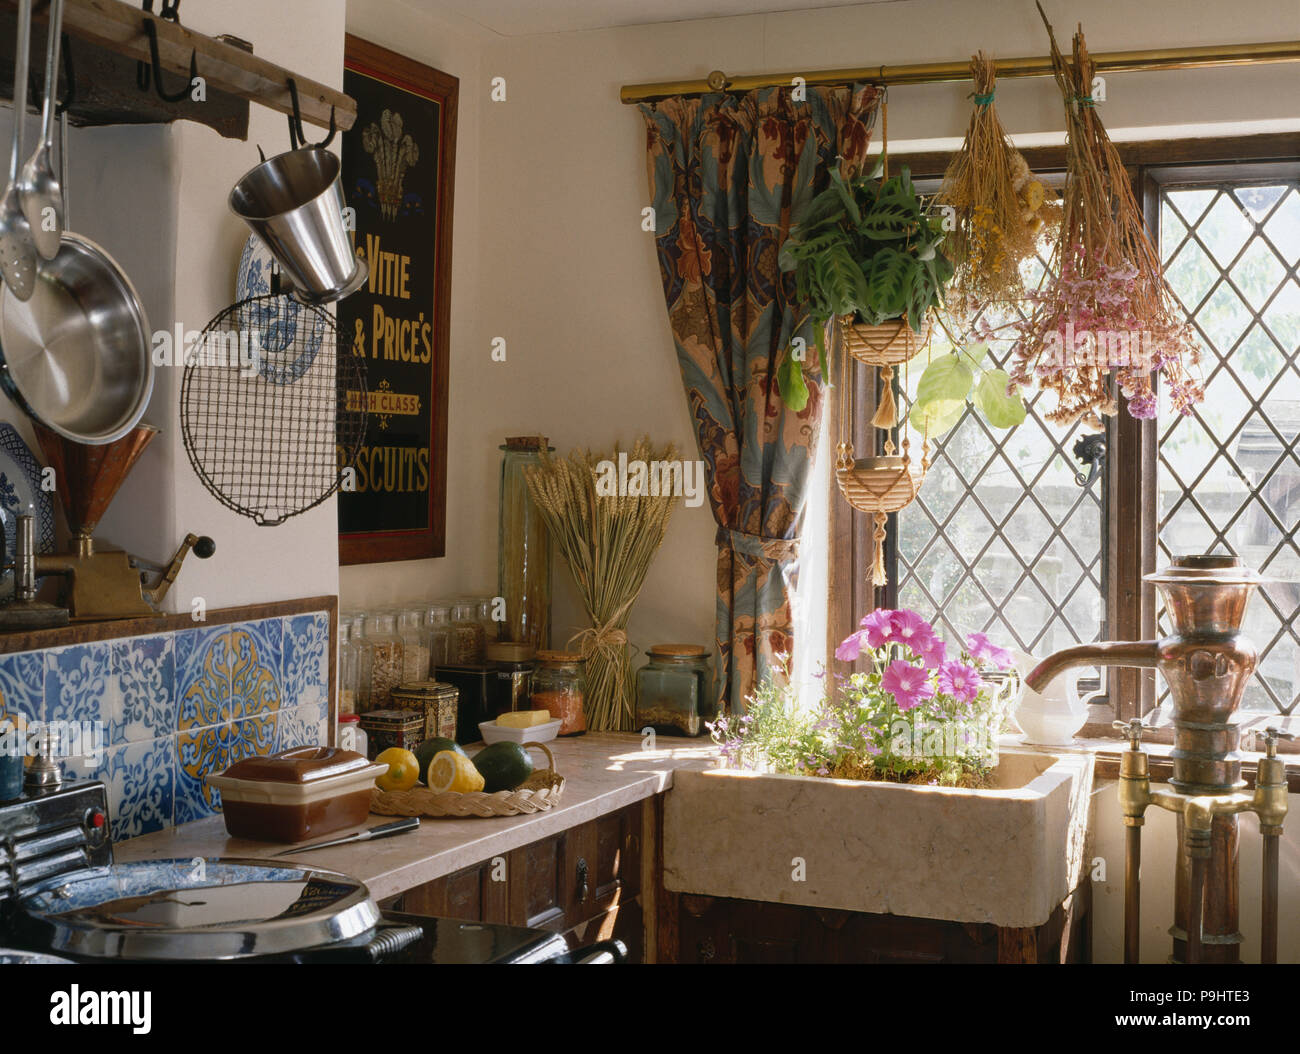 Dried flowers hanging above ceramic sink below lattice window in cottage kitchen Stock Photo